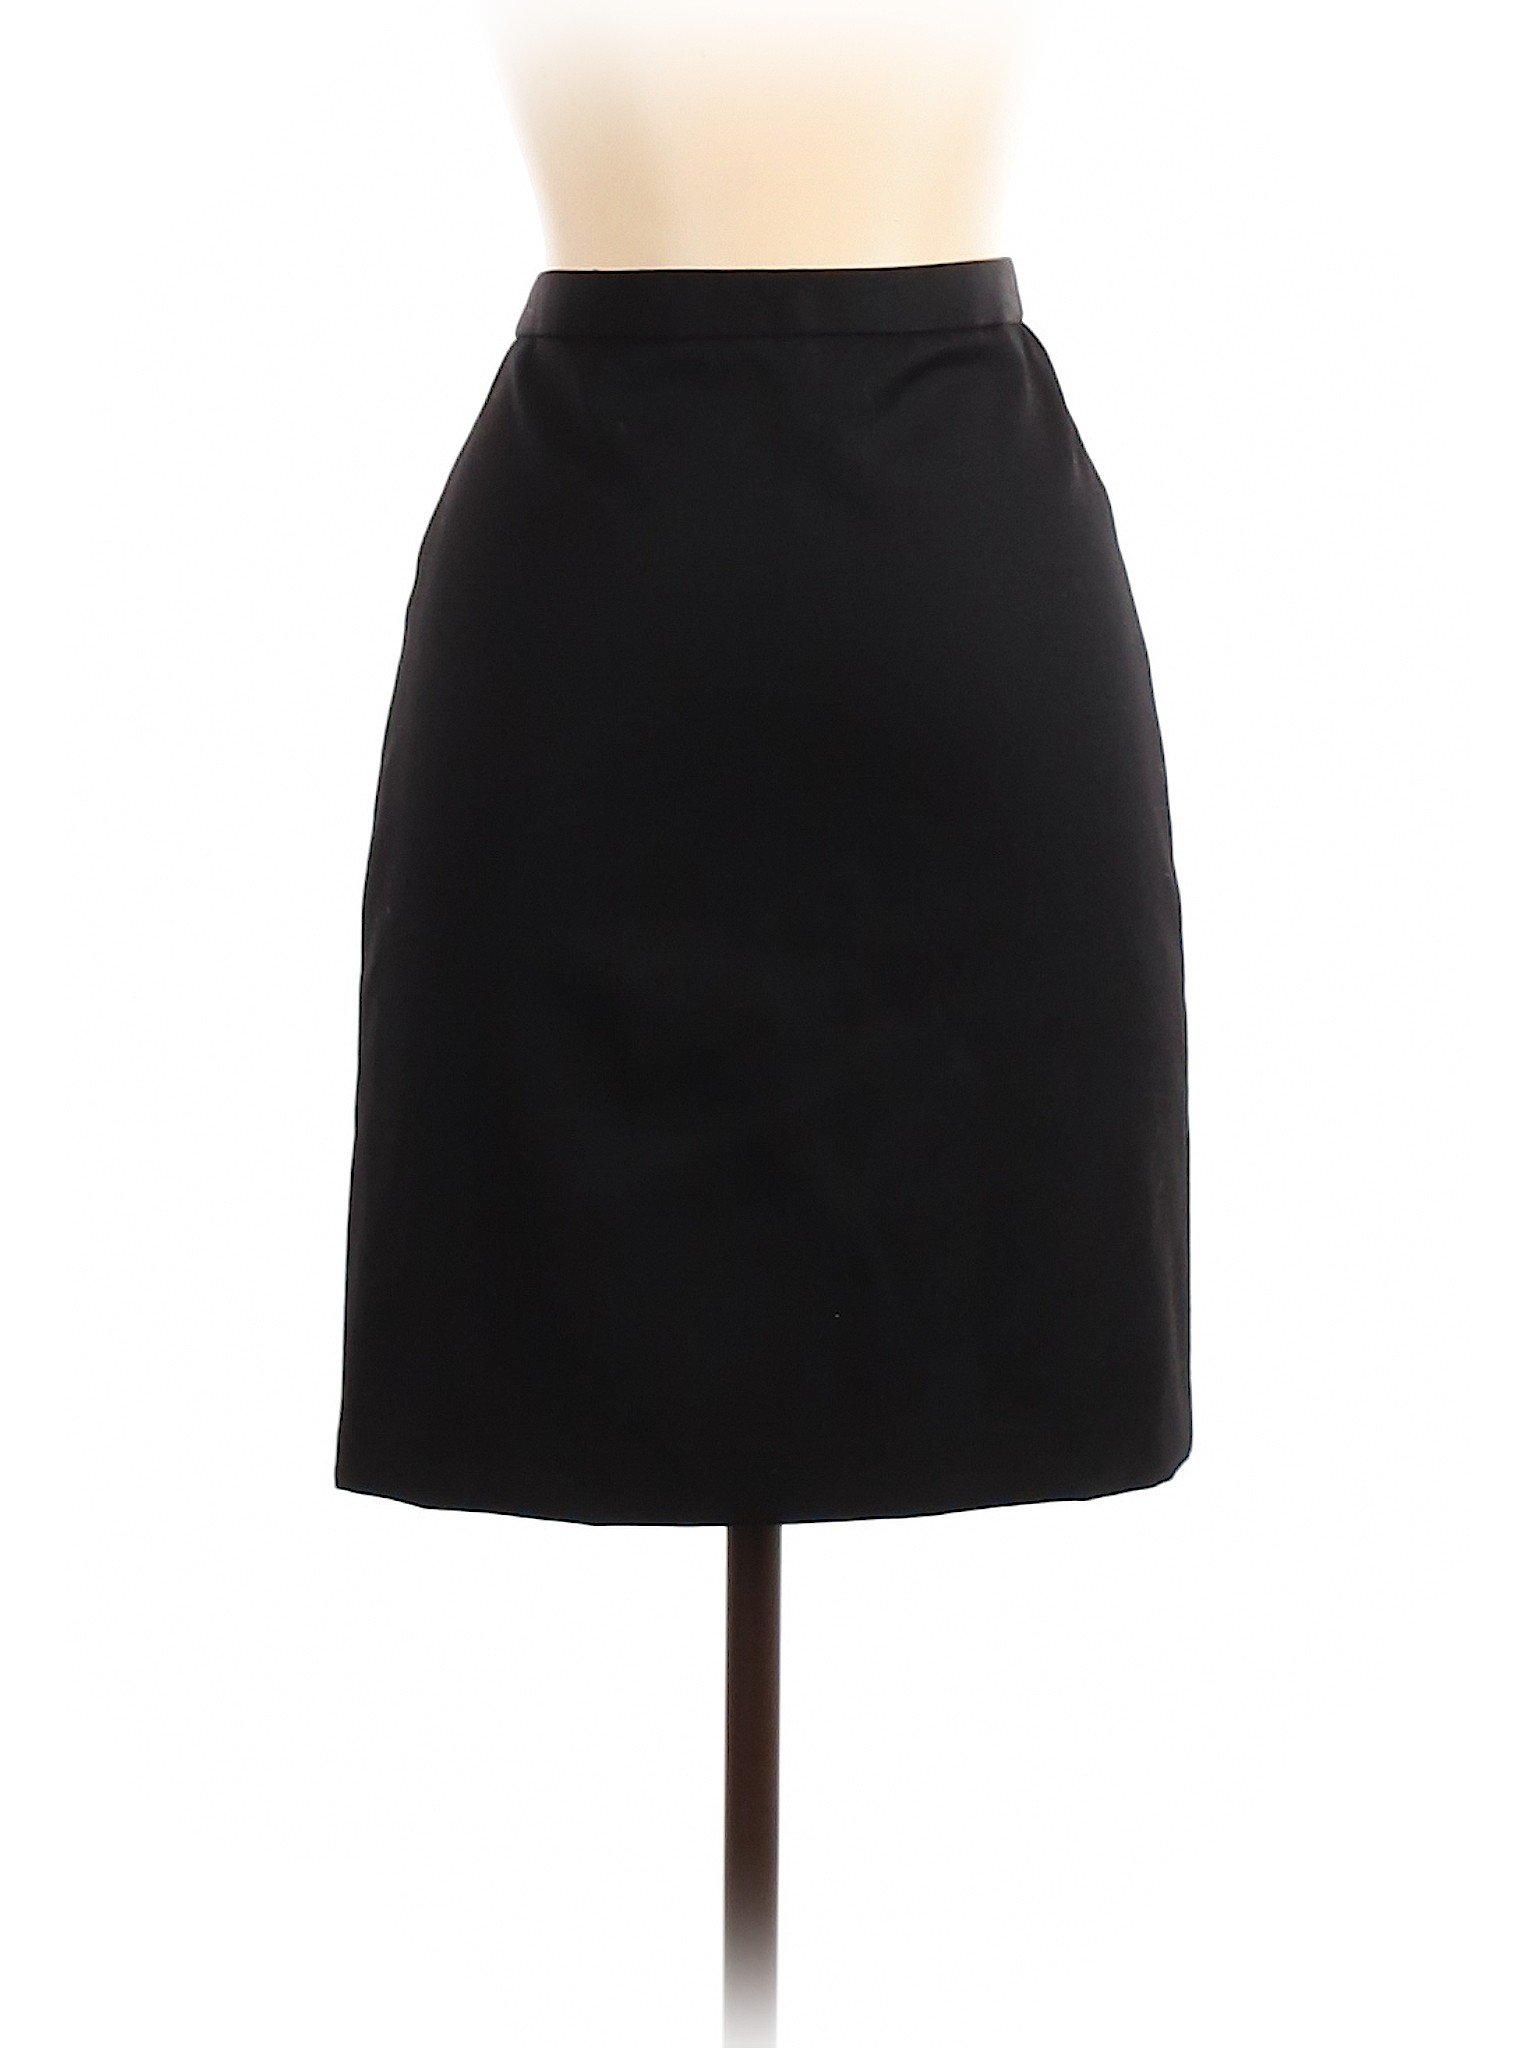 J.Crew Women Black Wool Skirt 0 | eBay